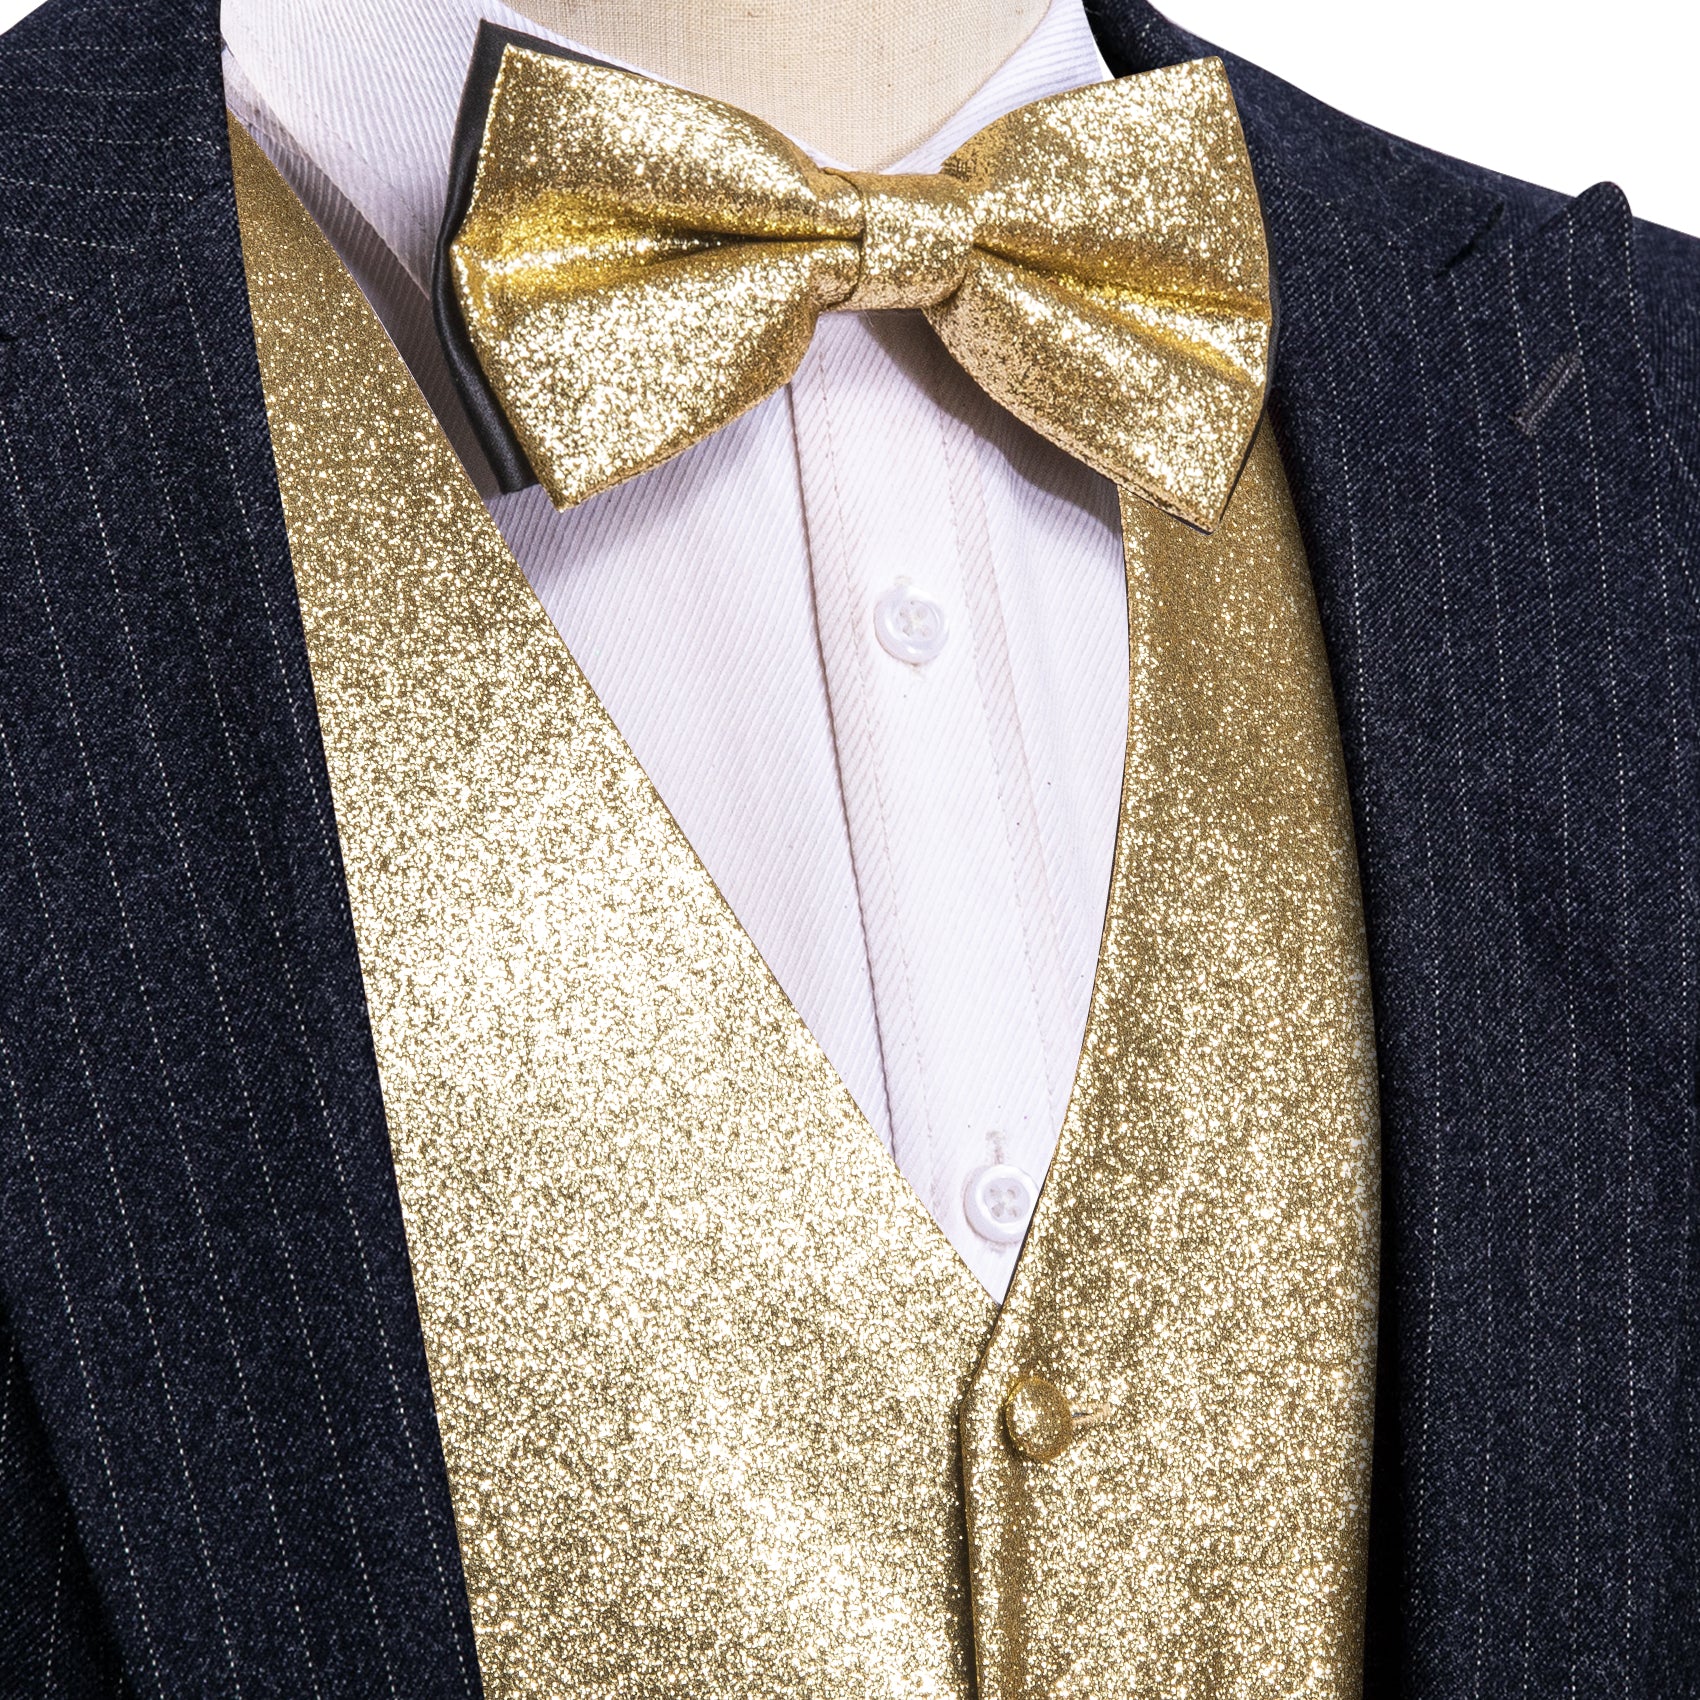 Barry.wang Men's Vest Shining Gold Solid Silk Bow Tie V-Neck Waistcoat Set